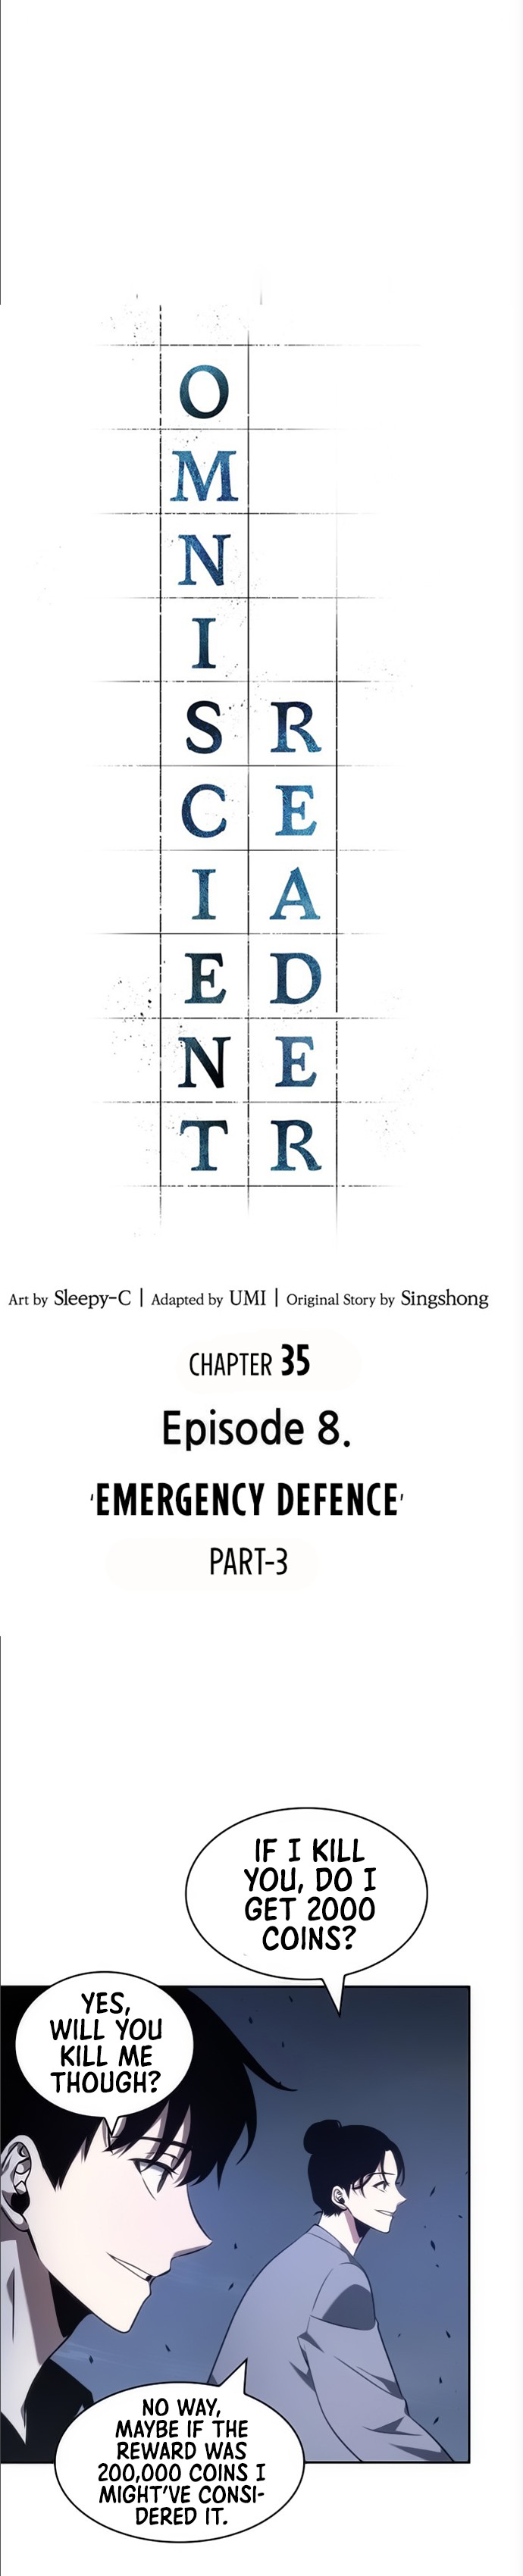 Omniscient Reader's Viewpoint Ch. 35 Emergency Defense Part 3